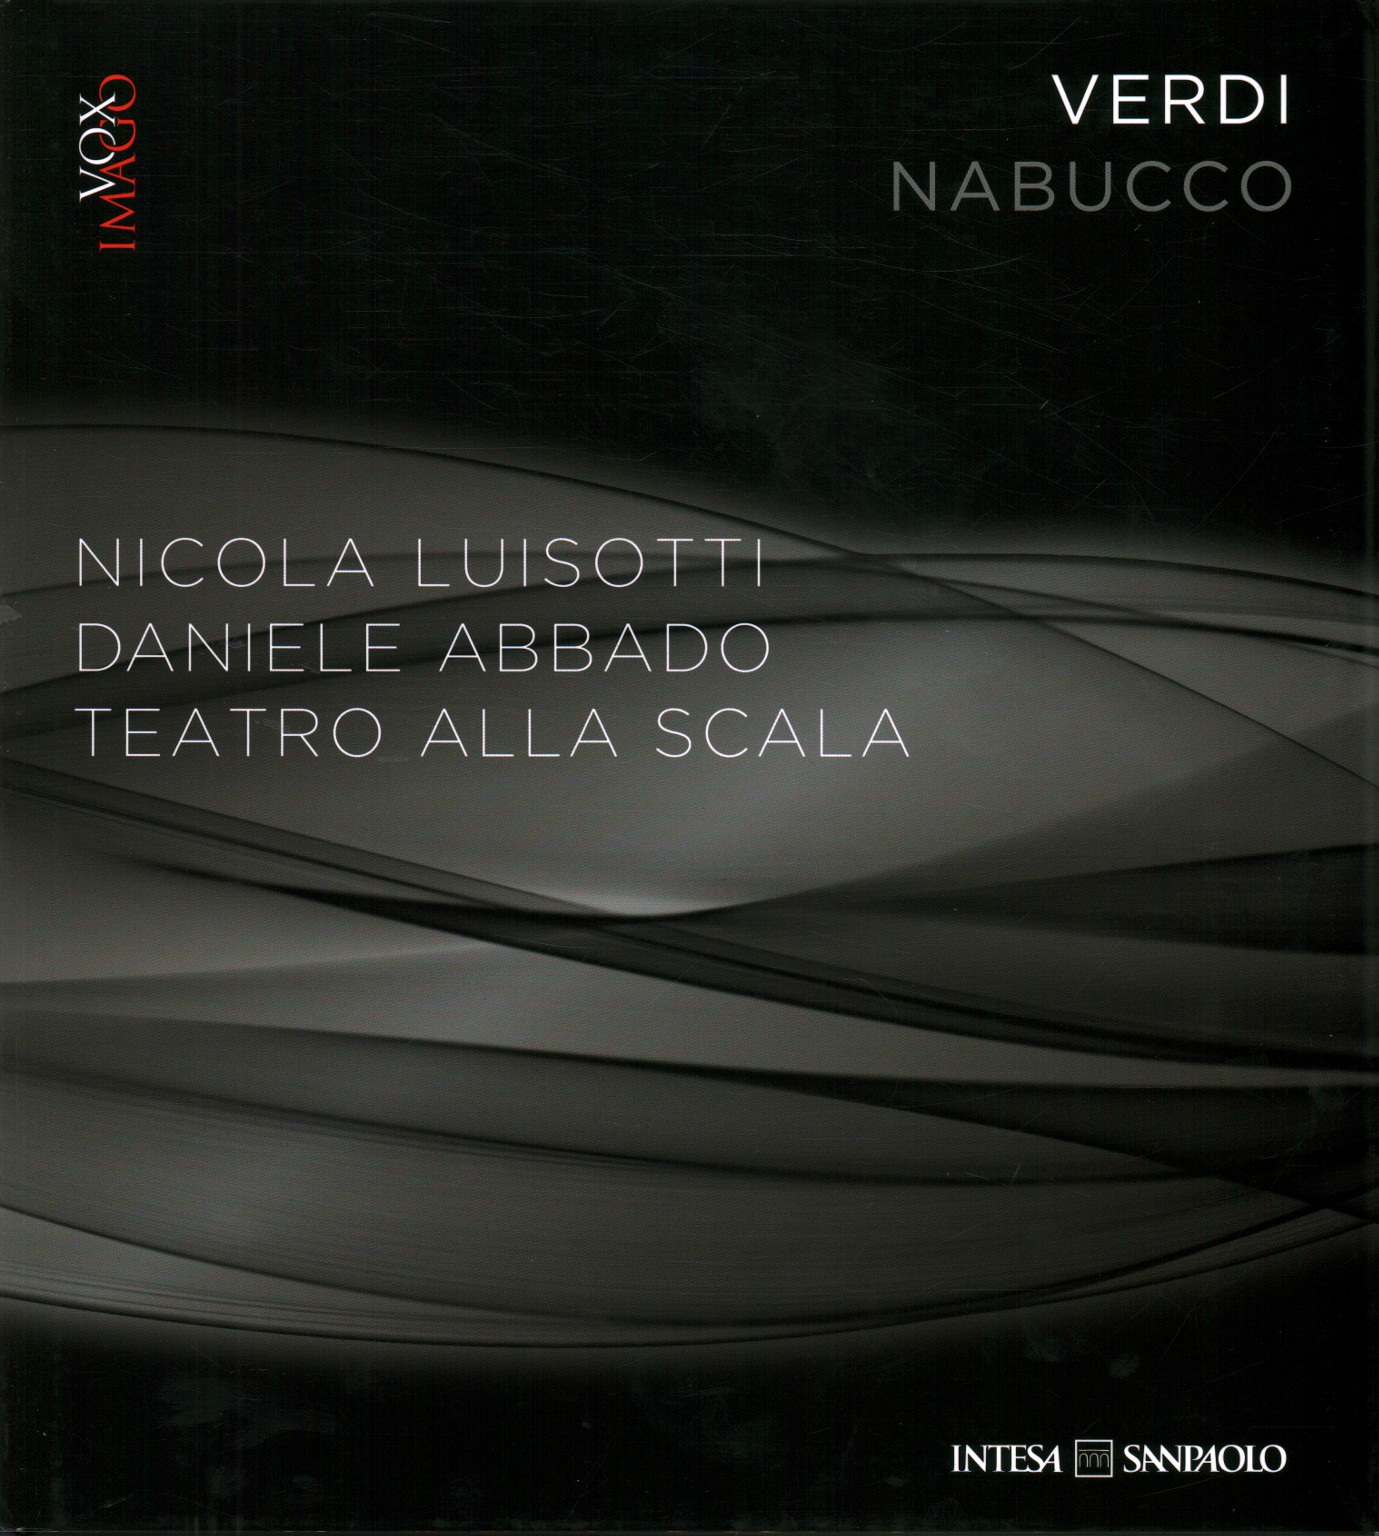 Verdi: Nabucco, Nicola Luisotti Daniele Abbado